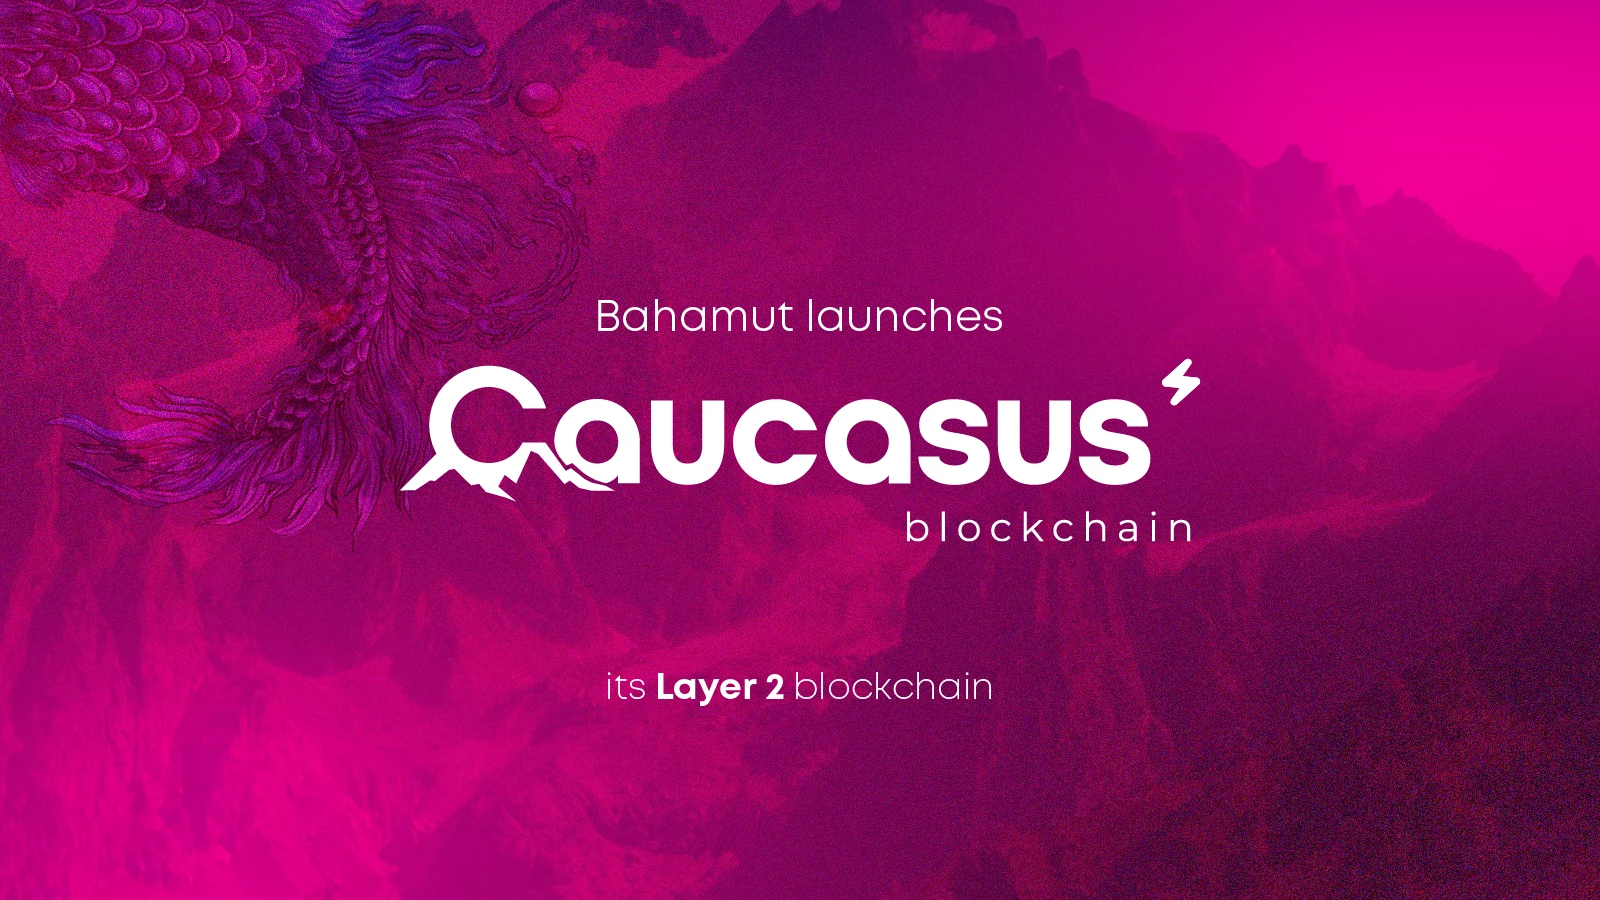 Bahamut launches Caucasus, its Layer 2 blockchain